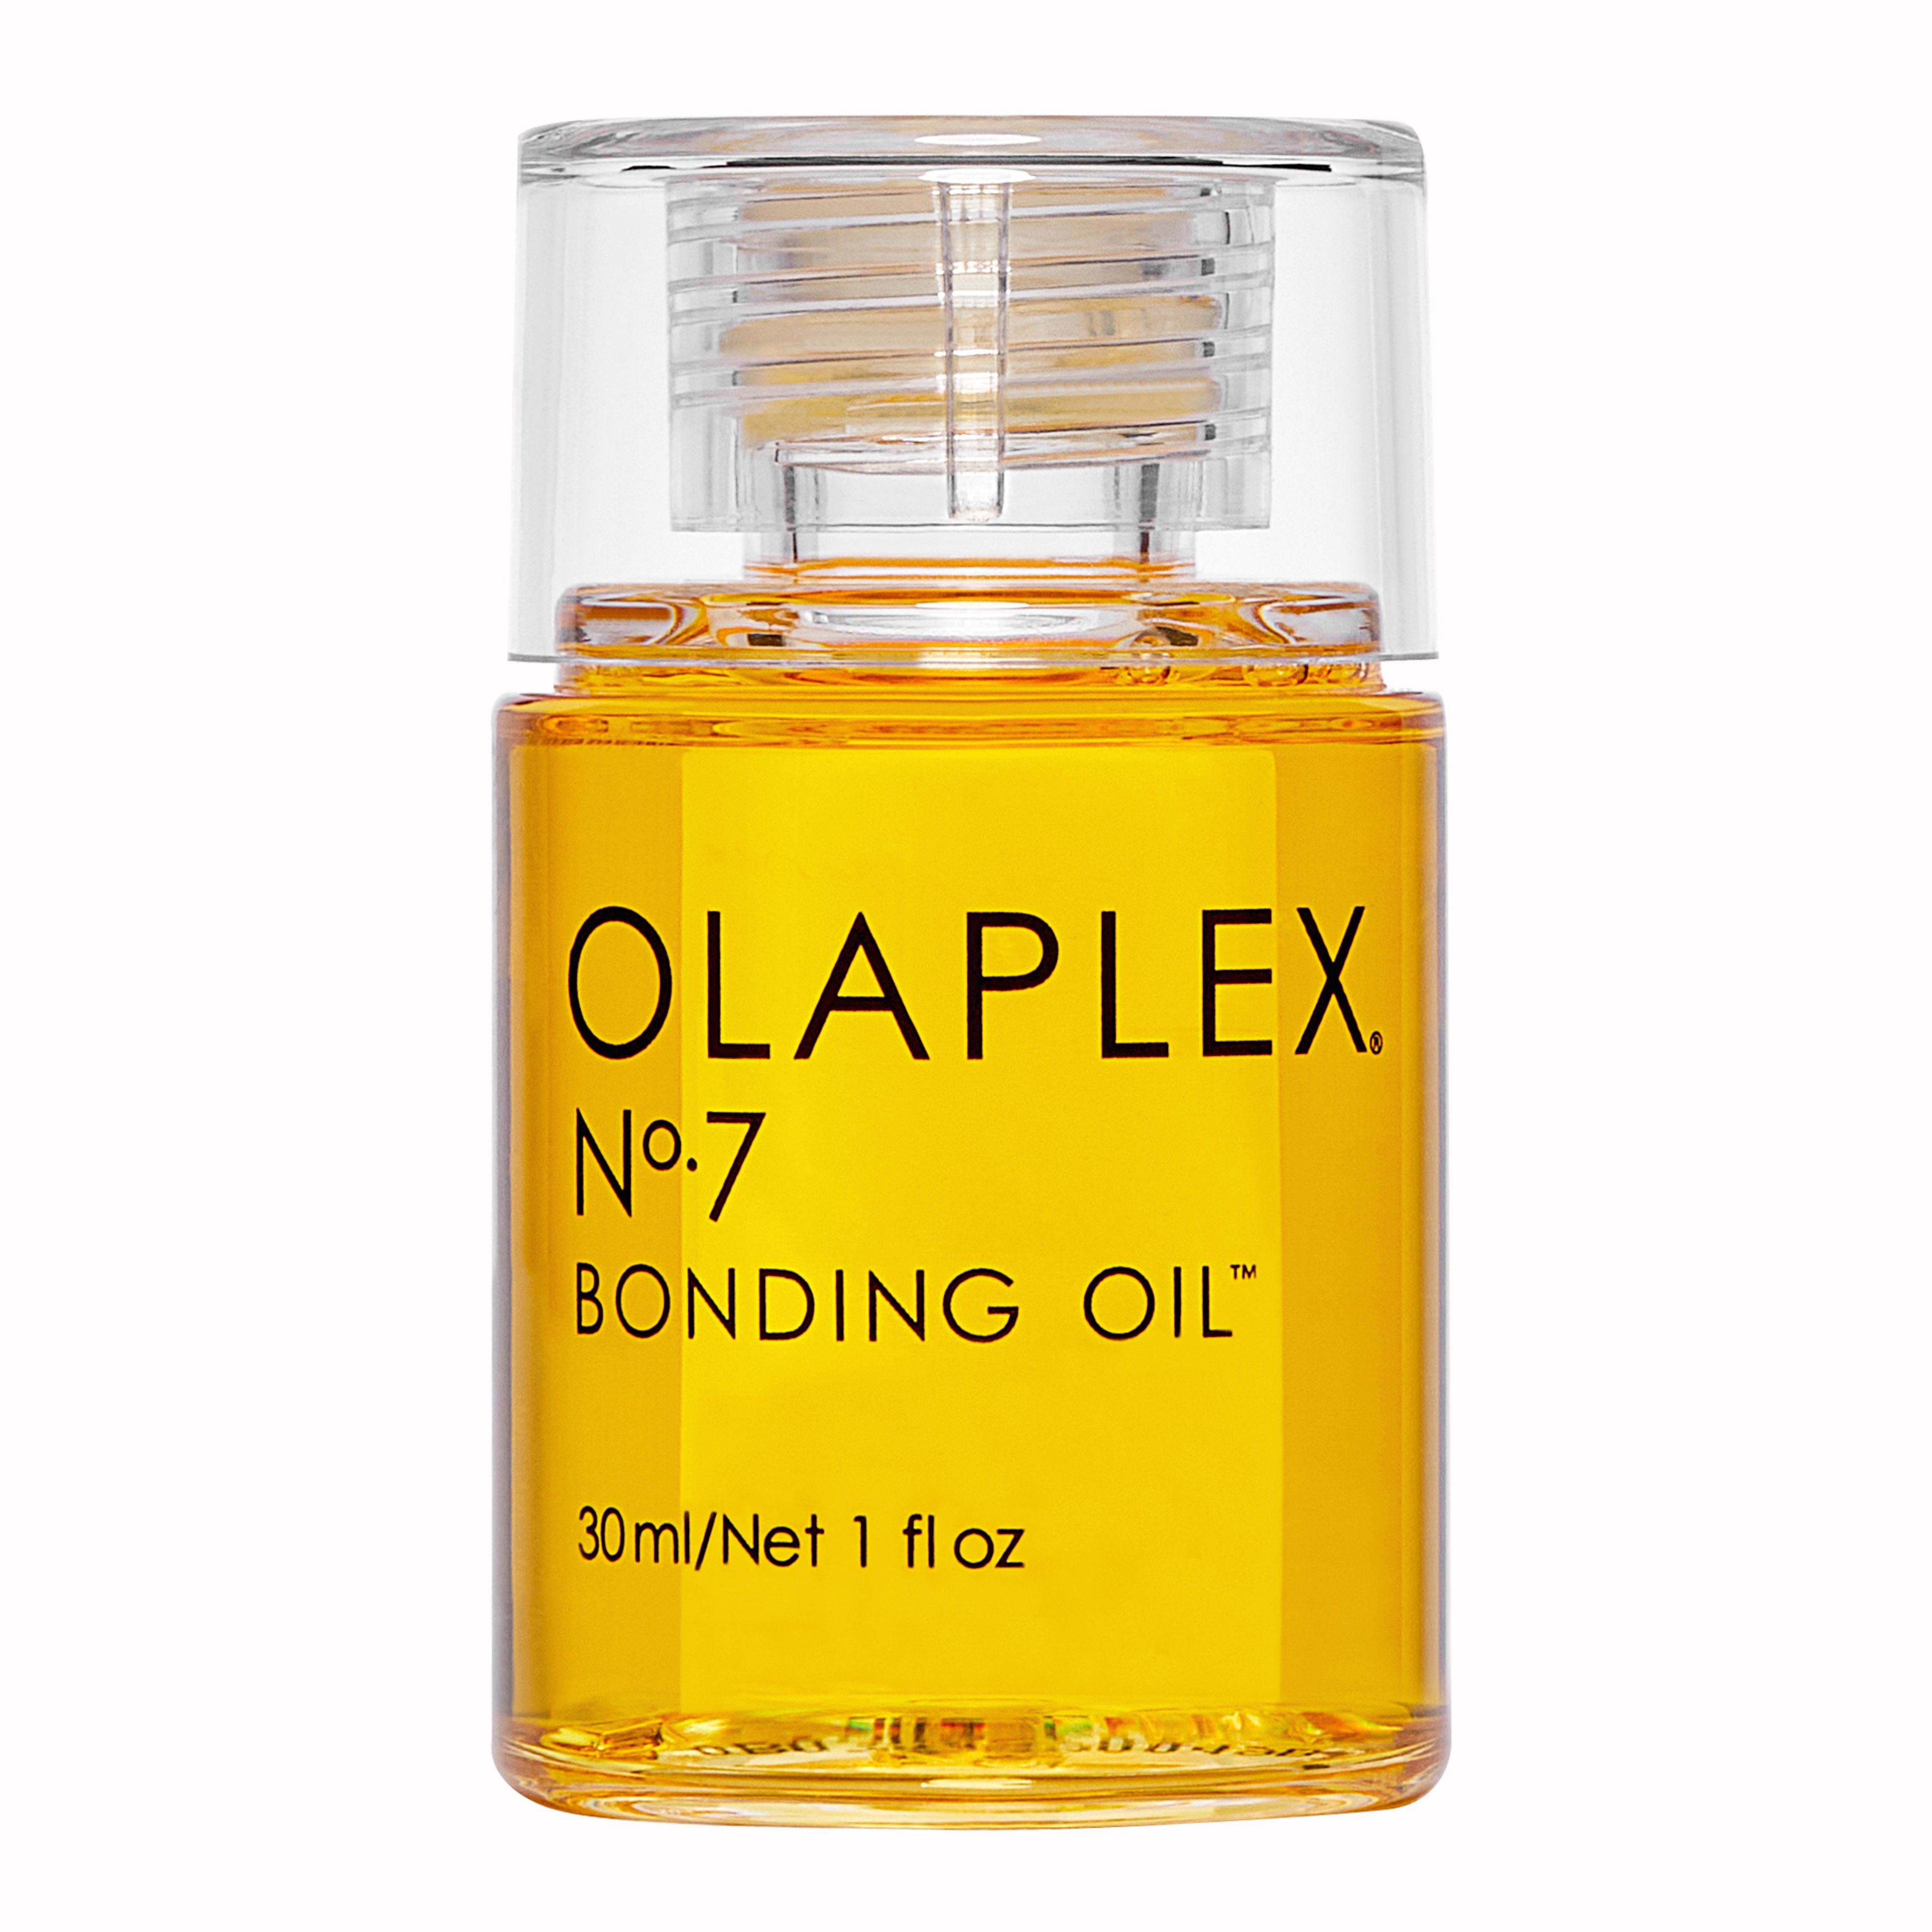 Olaplex No. 7 Bond Oil 1